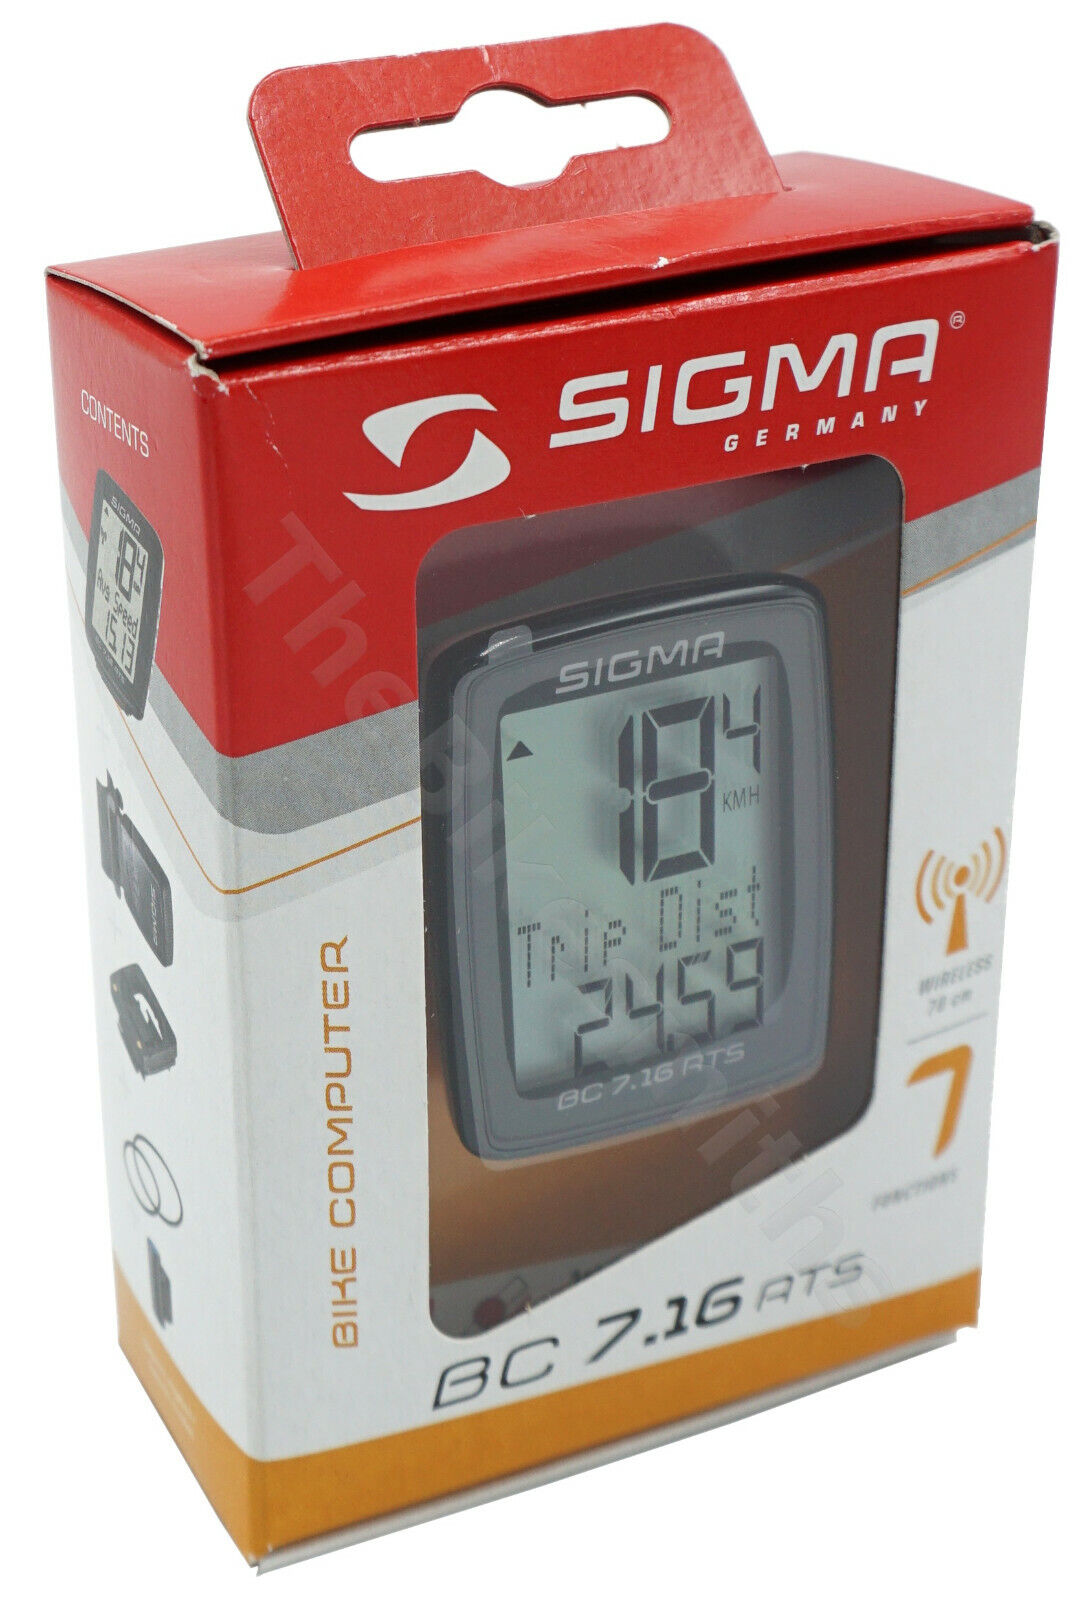 Sigma BC-7.16 ATS Wireless Bike Computer